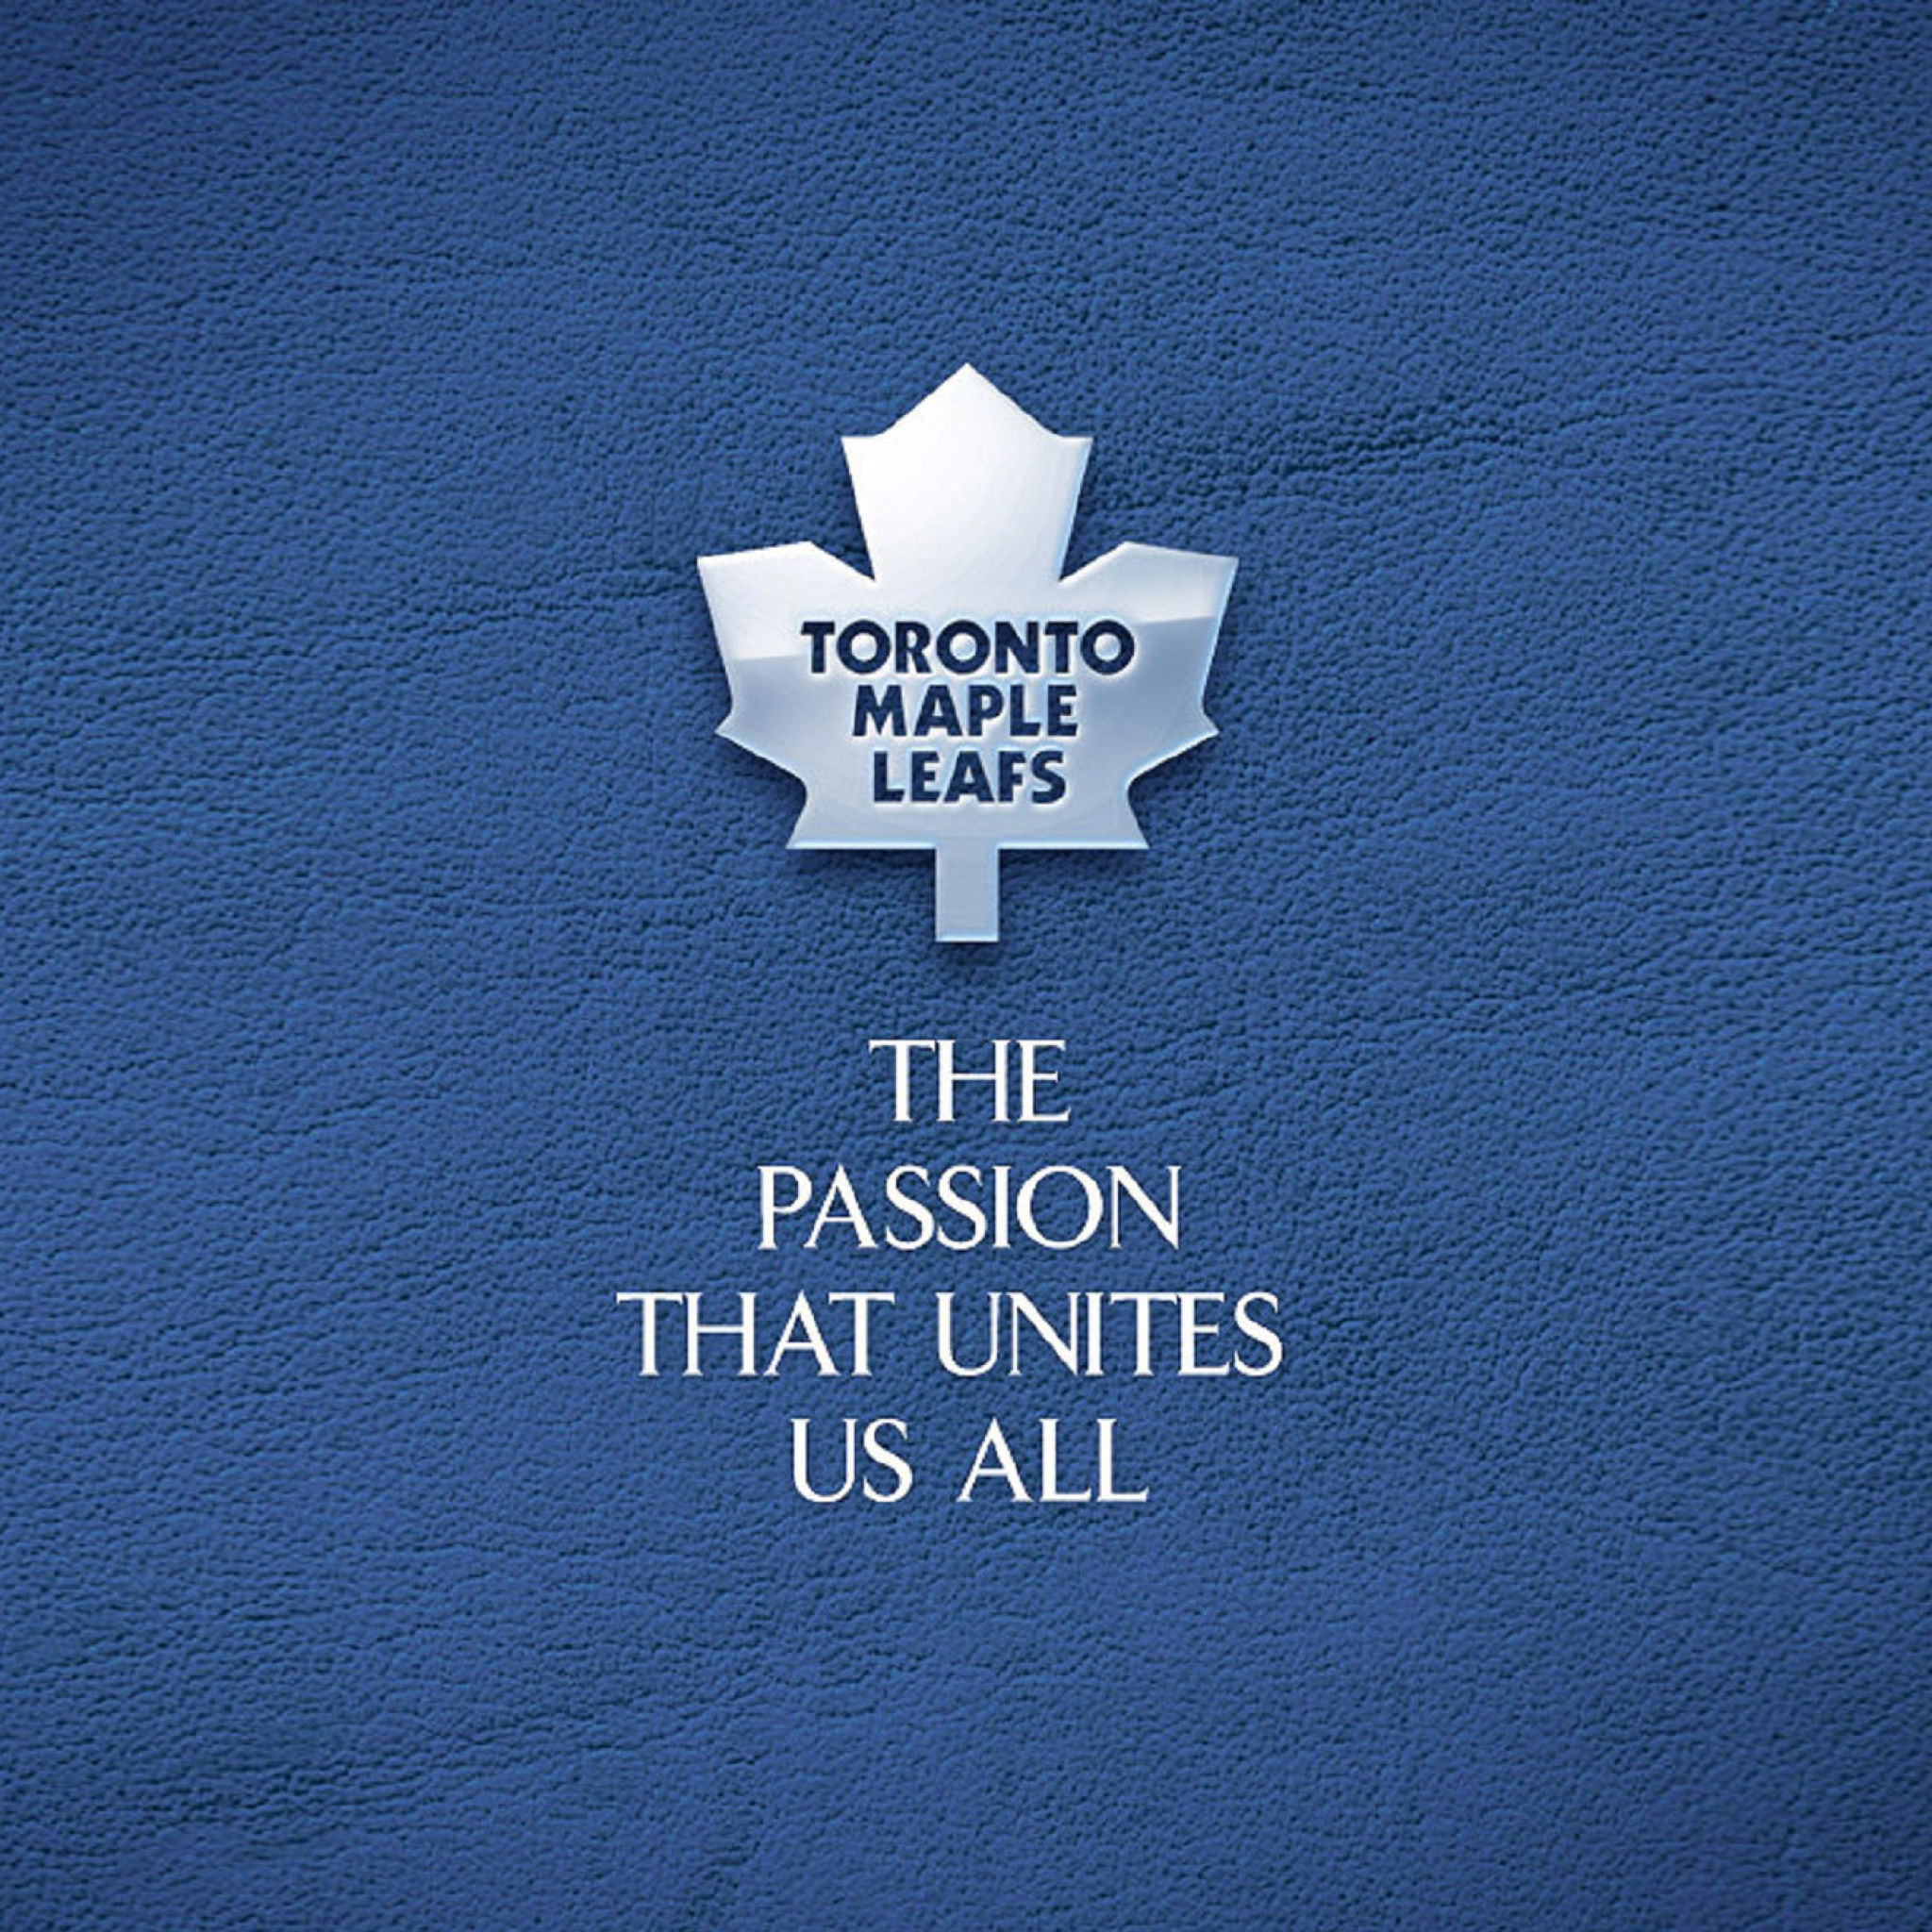 Toronto Maple Leafs NHL Logo wallpaper 2048x2048